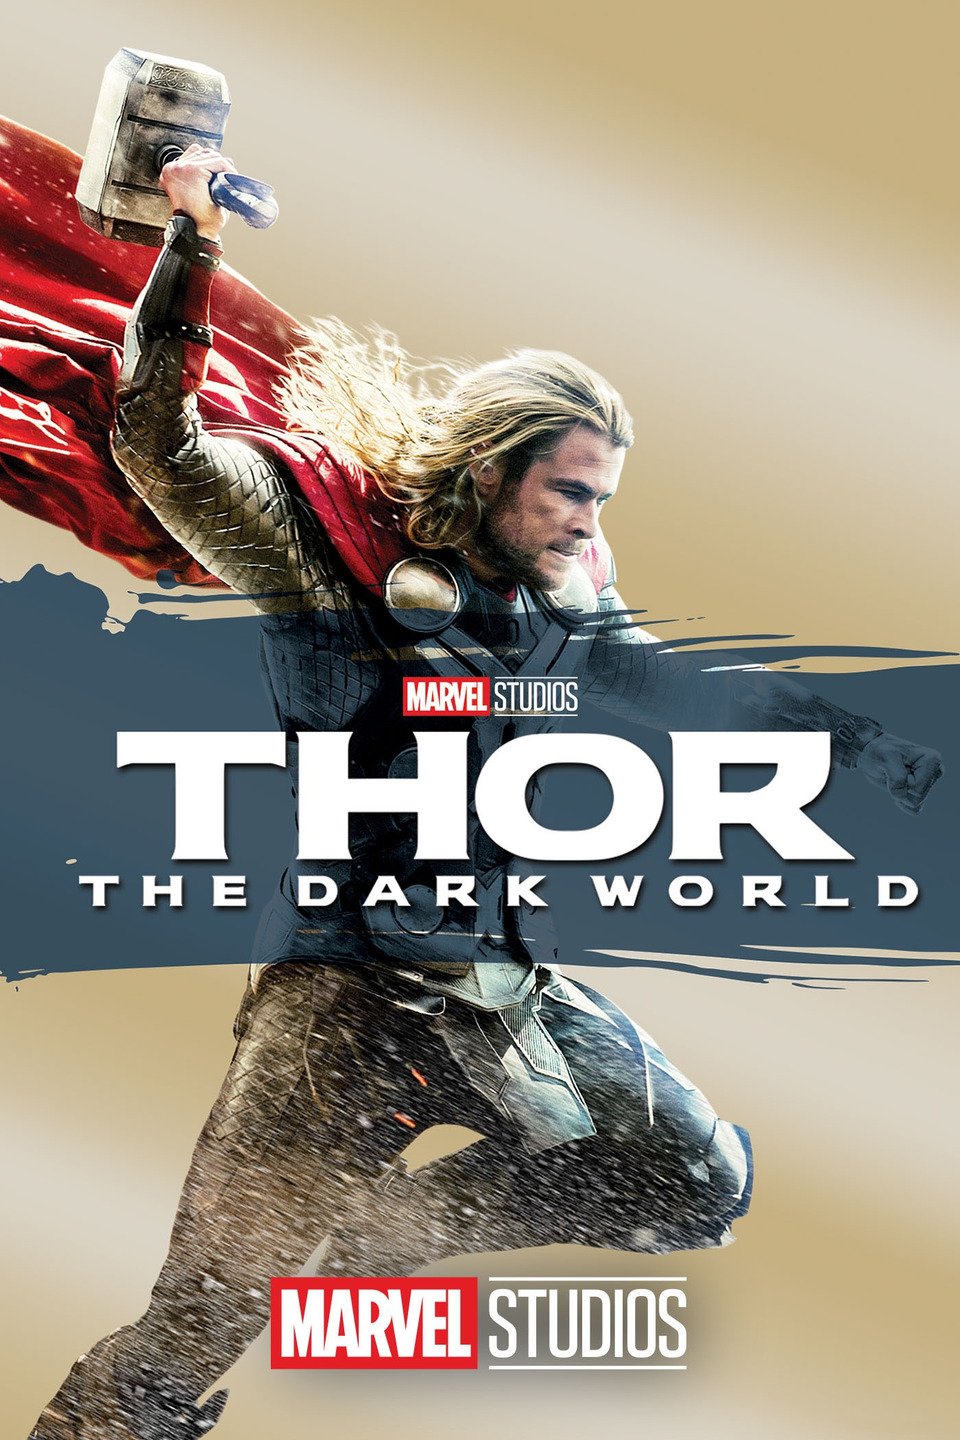 [MINI Super-HQ] Thor: The Dark World (2013) ธอร์ 2 เทพเจ้าสายฟ้าโลกาทมิฬ [1080p] [พากย์ไทย DTS + อังกฤษ DTS] [BrRip.x264.DTS] [บรรยายไทย + อังกฤษ] [เสียงไทย + ซับไทย] [ONE2UP]